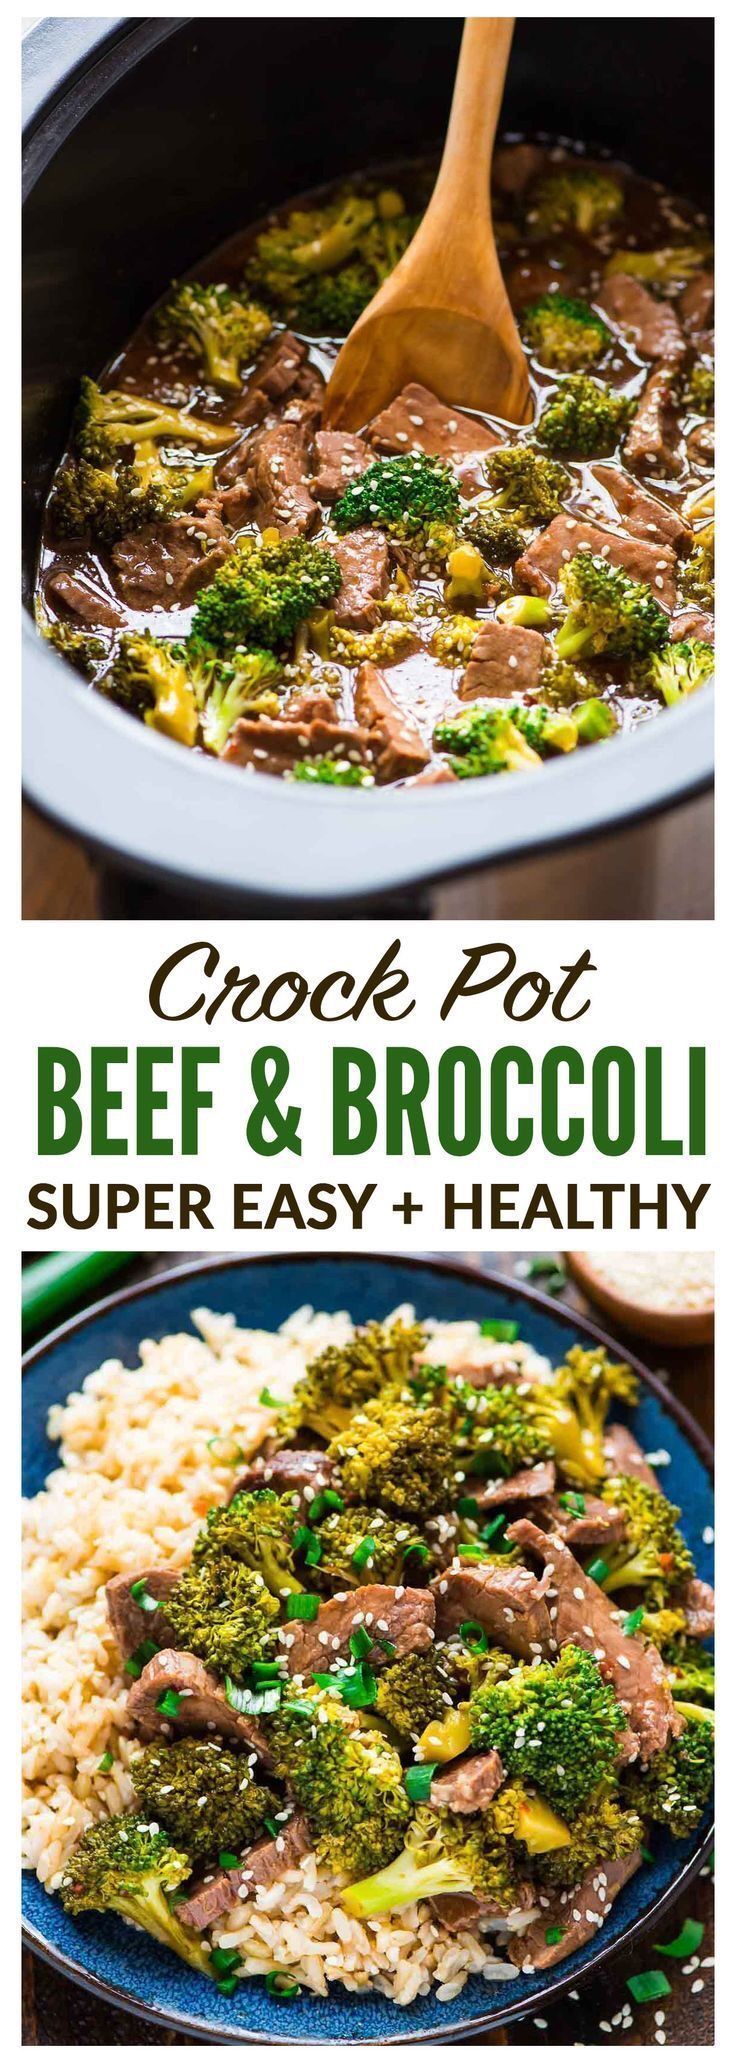 19 dinner recipes easy crockpot ideas